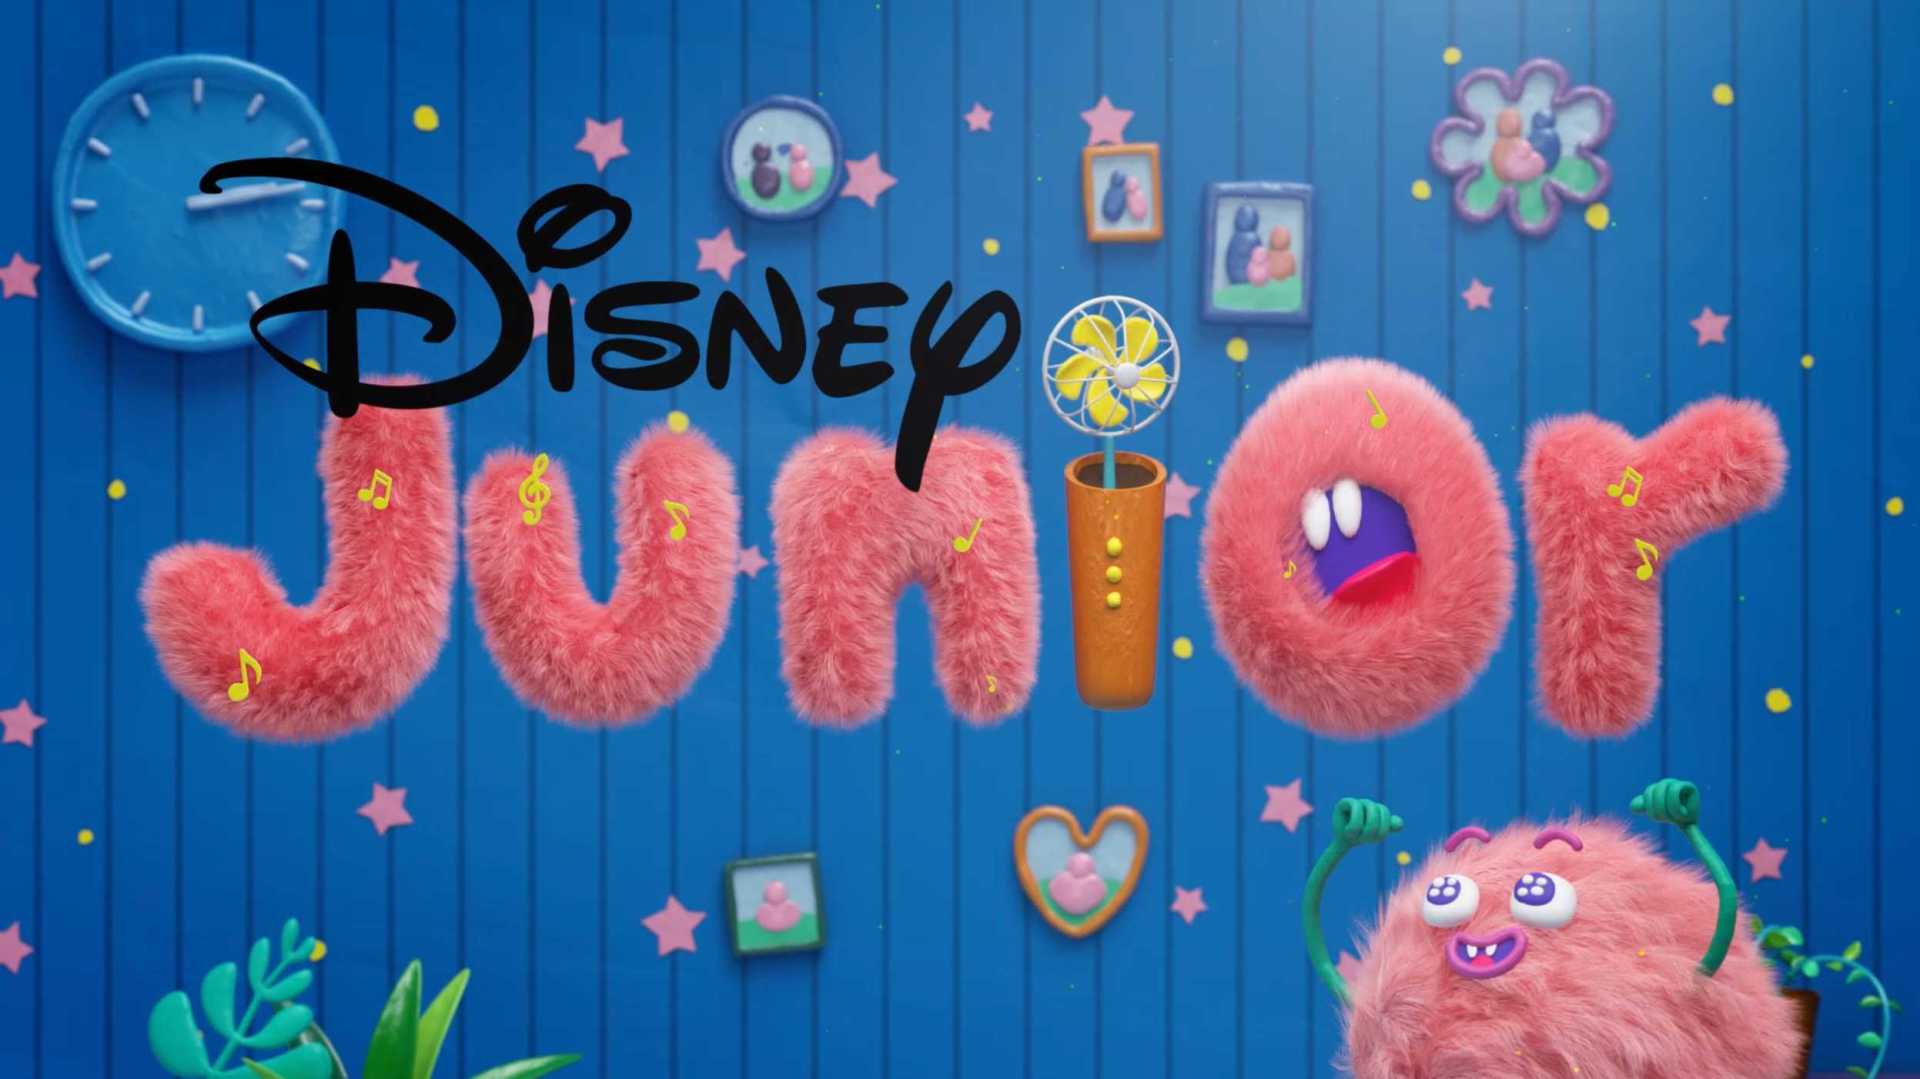 迪士尼 Disney Junior Ident Series 2019